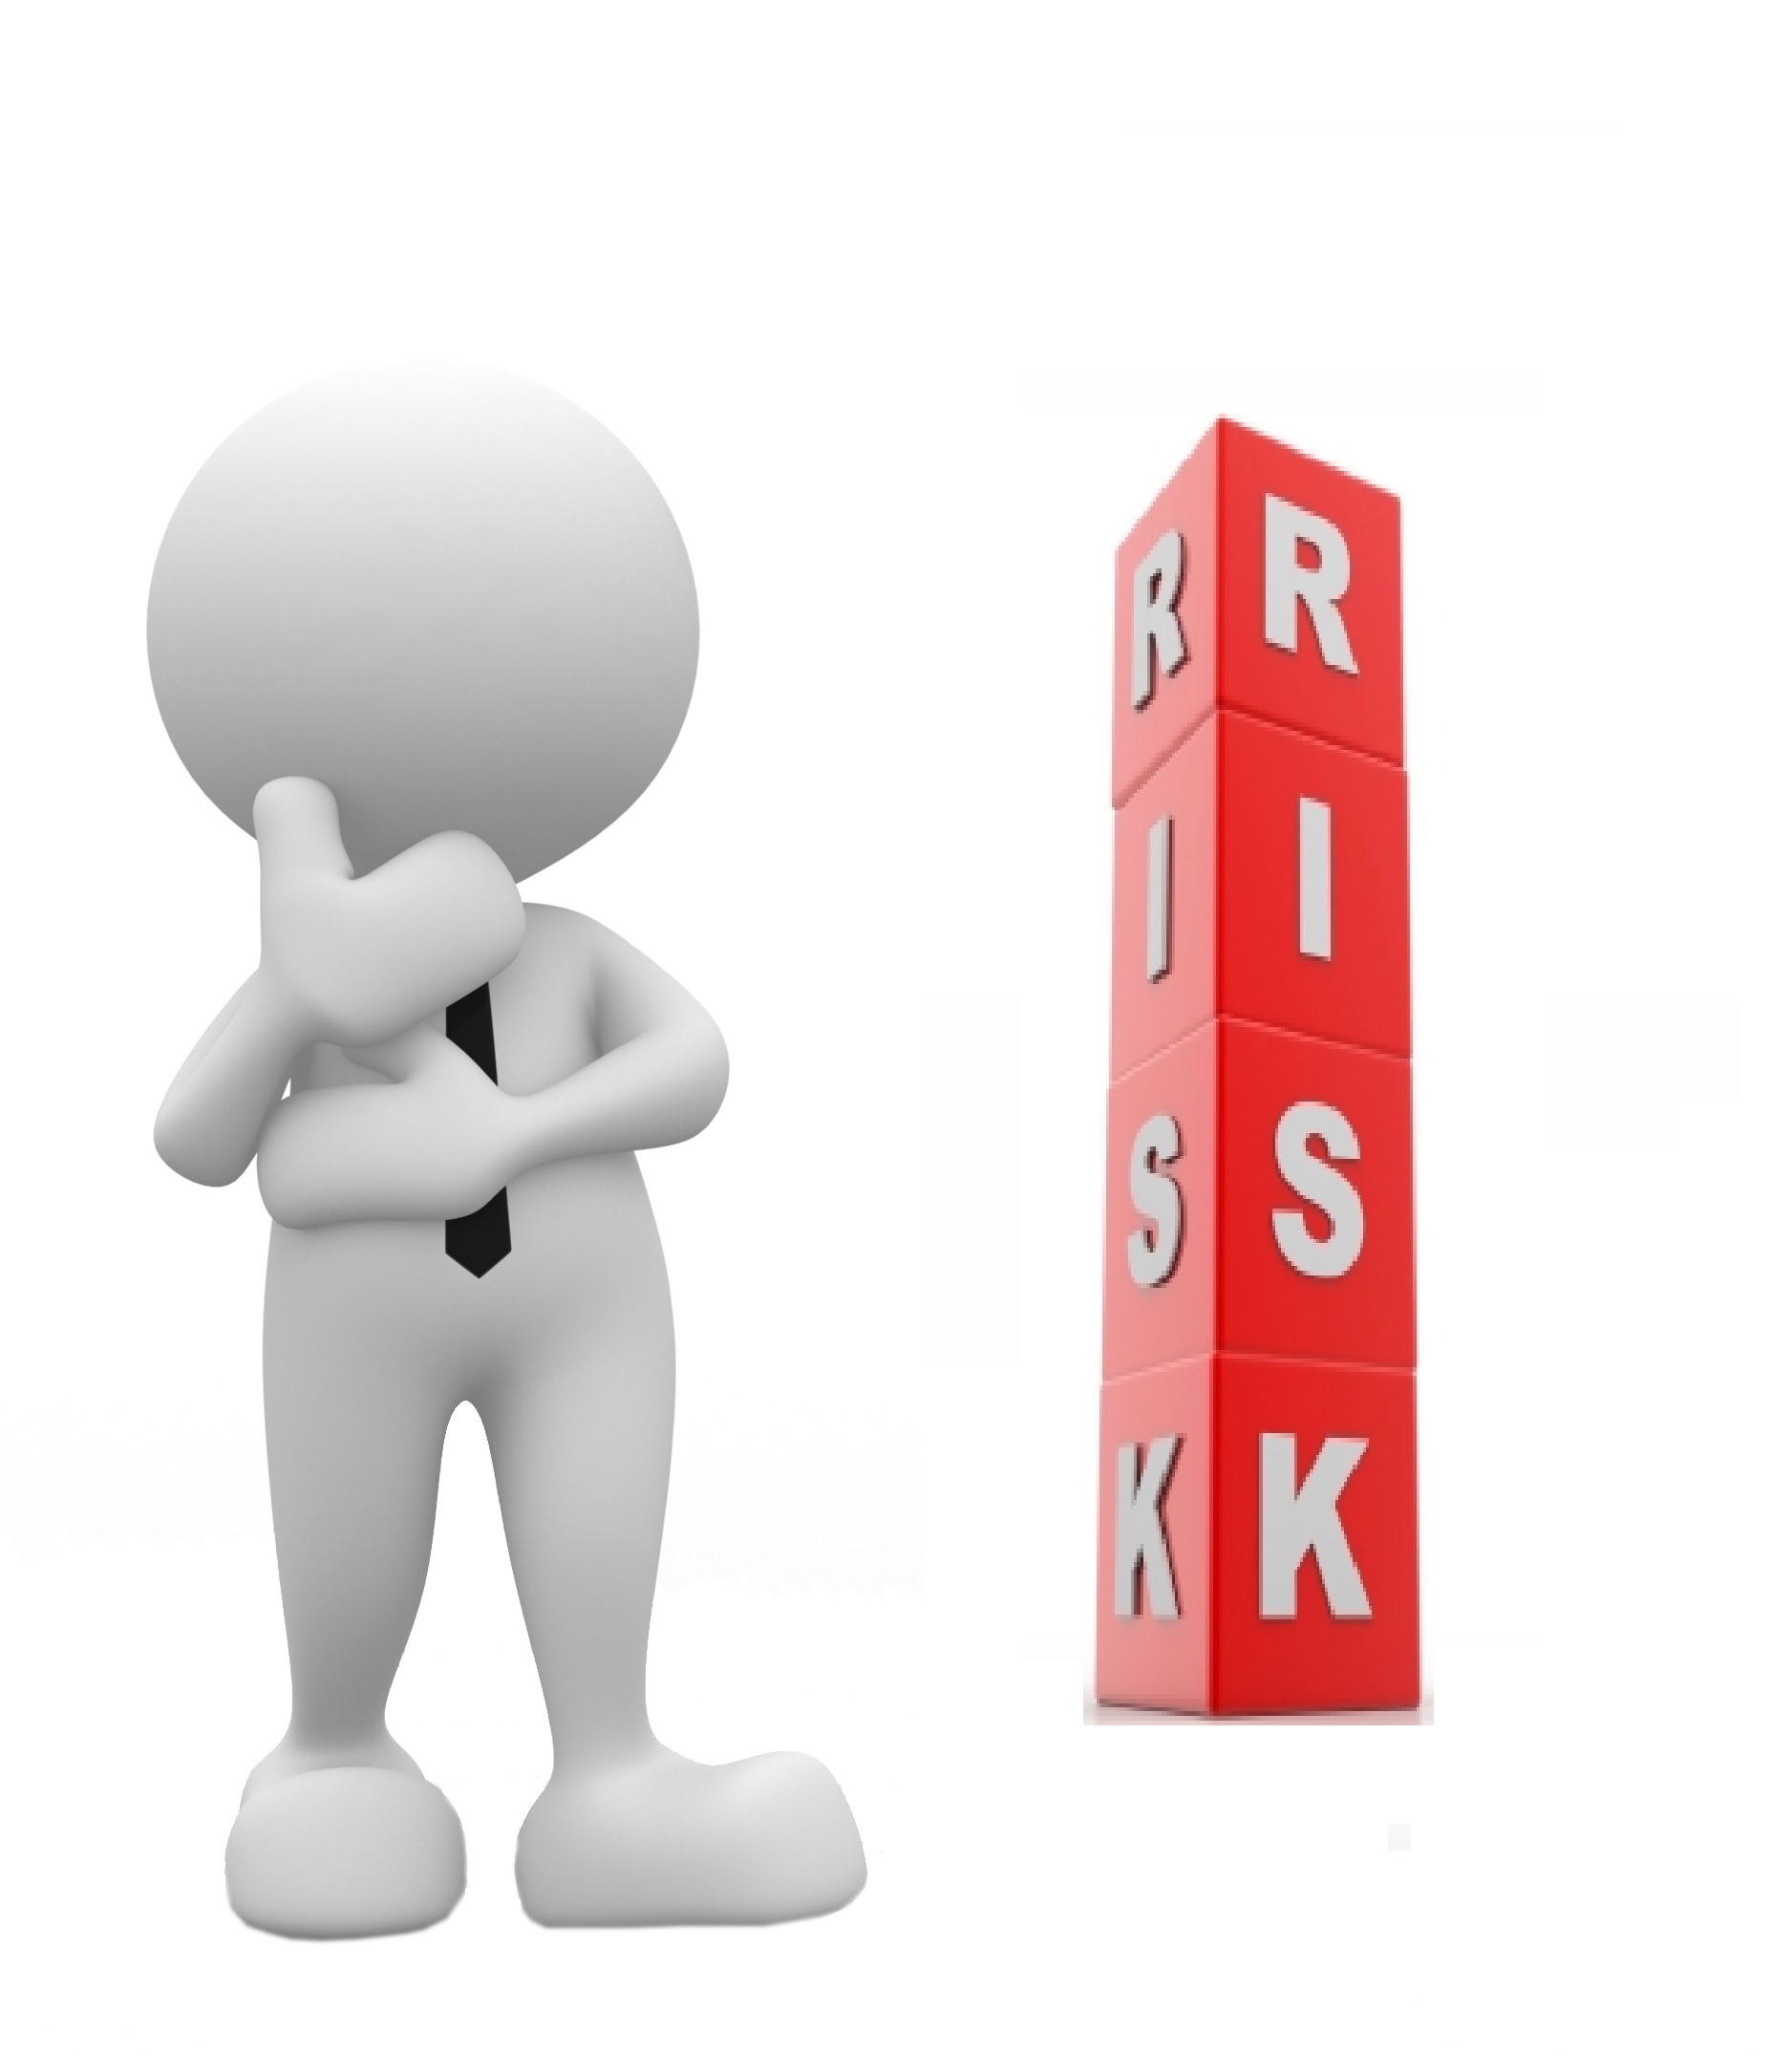 Risk Analizi Nedir?